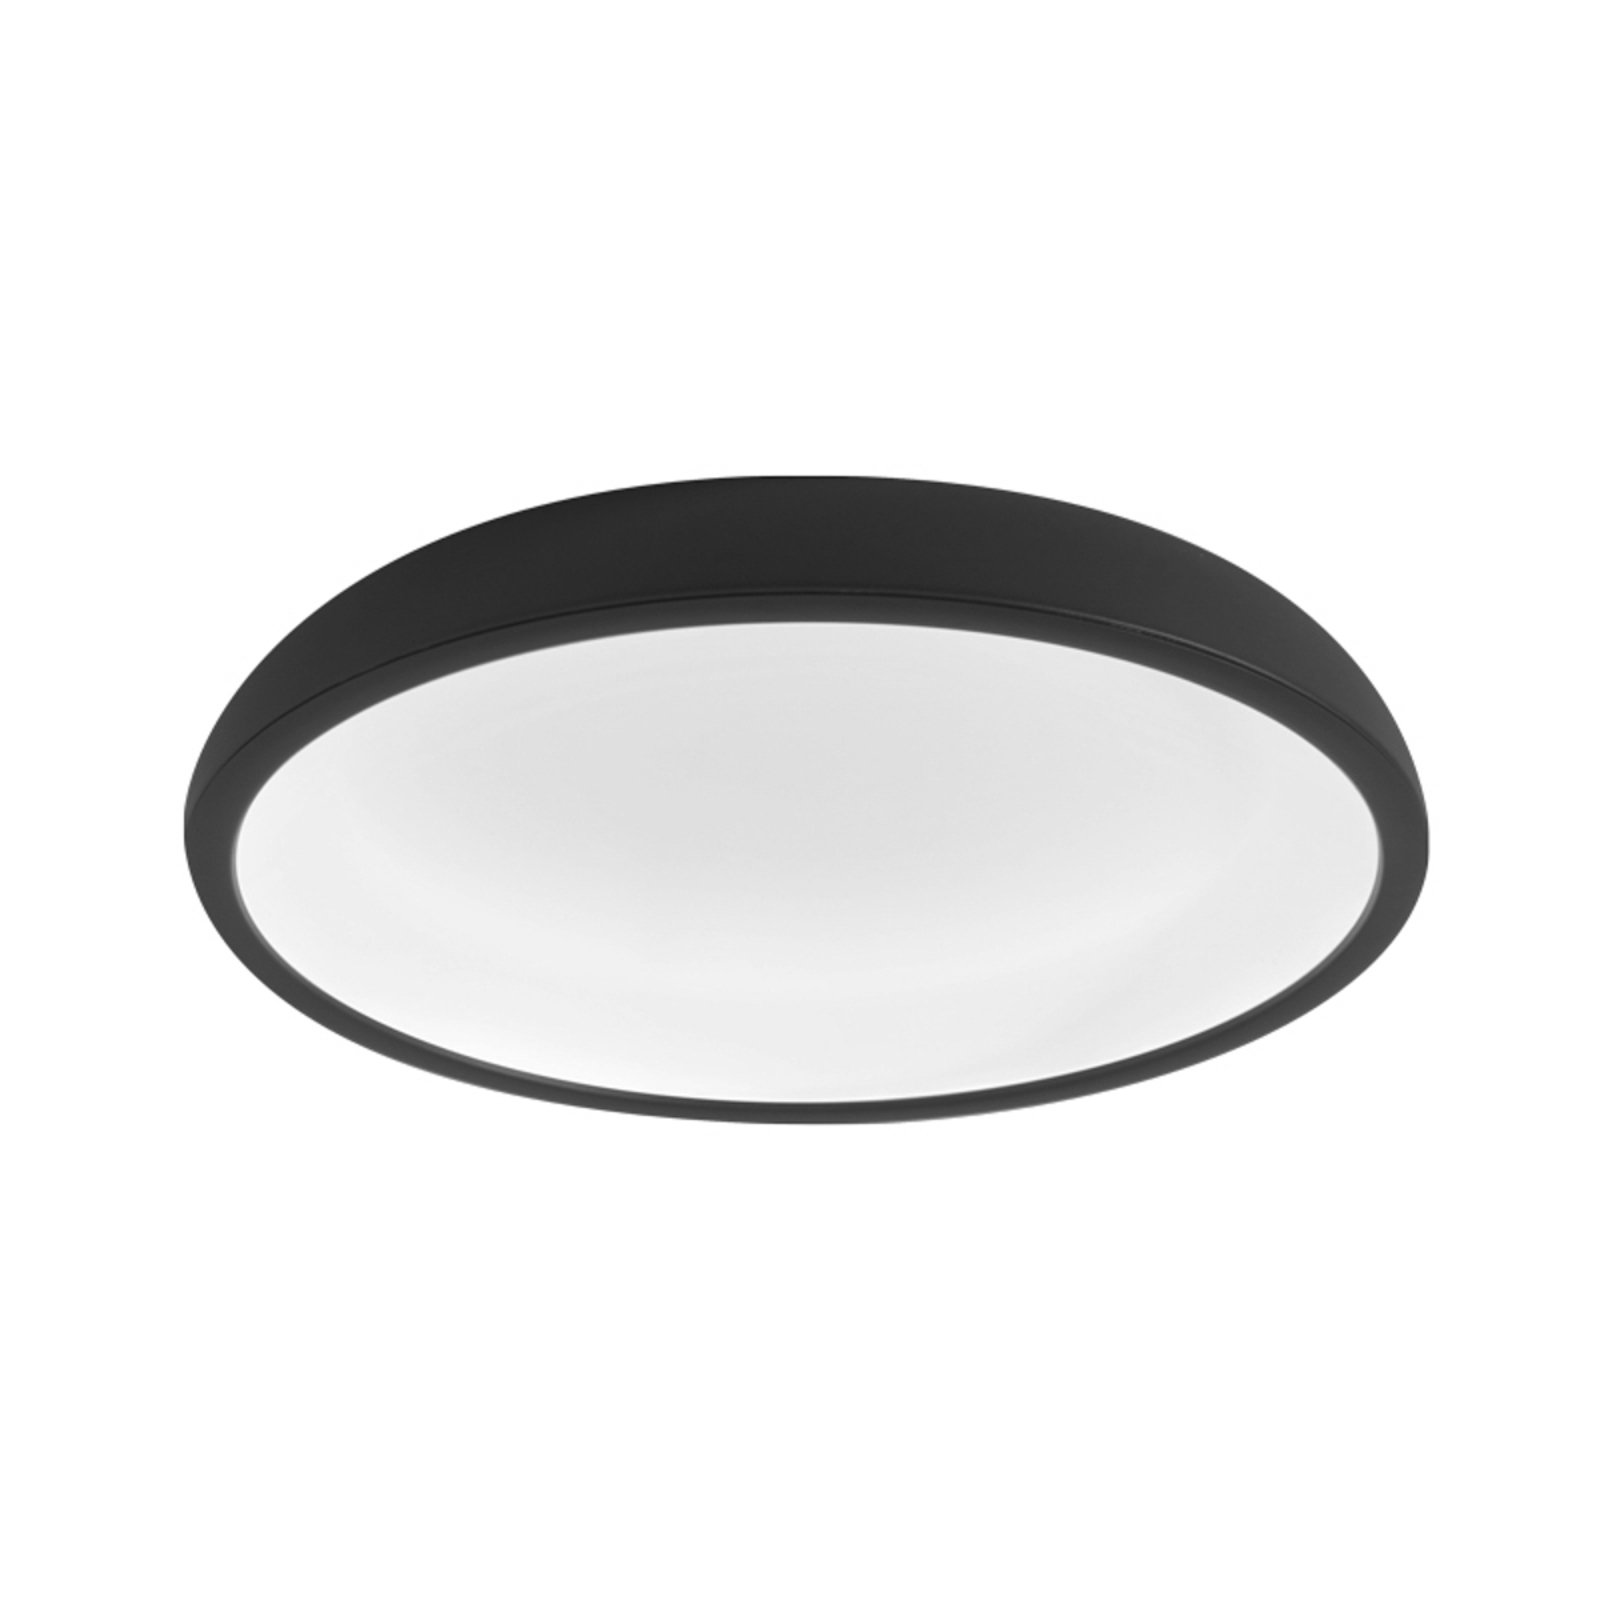 Stilnovo Reflexio -LED-kattovalaisin Ø65cm, musta